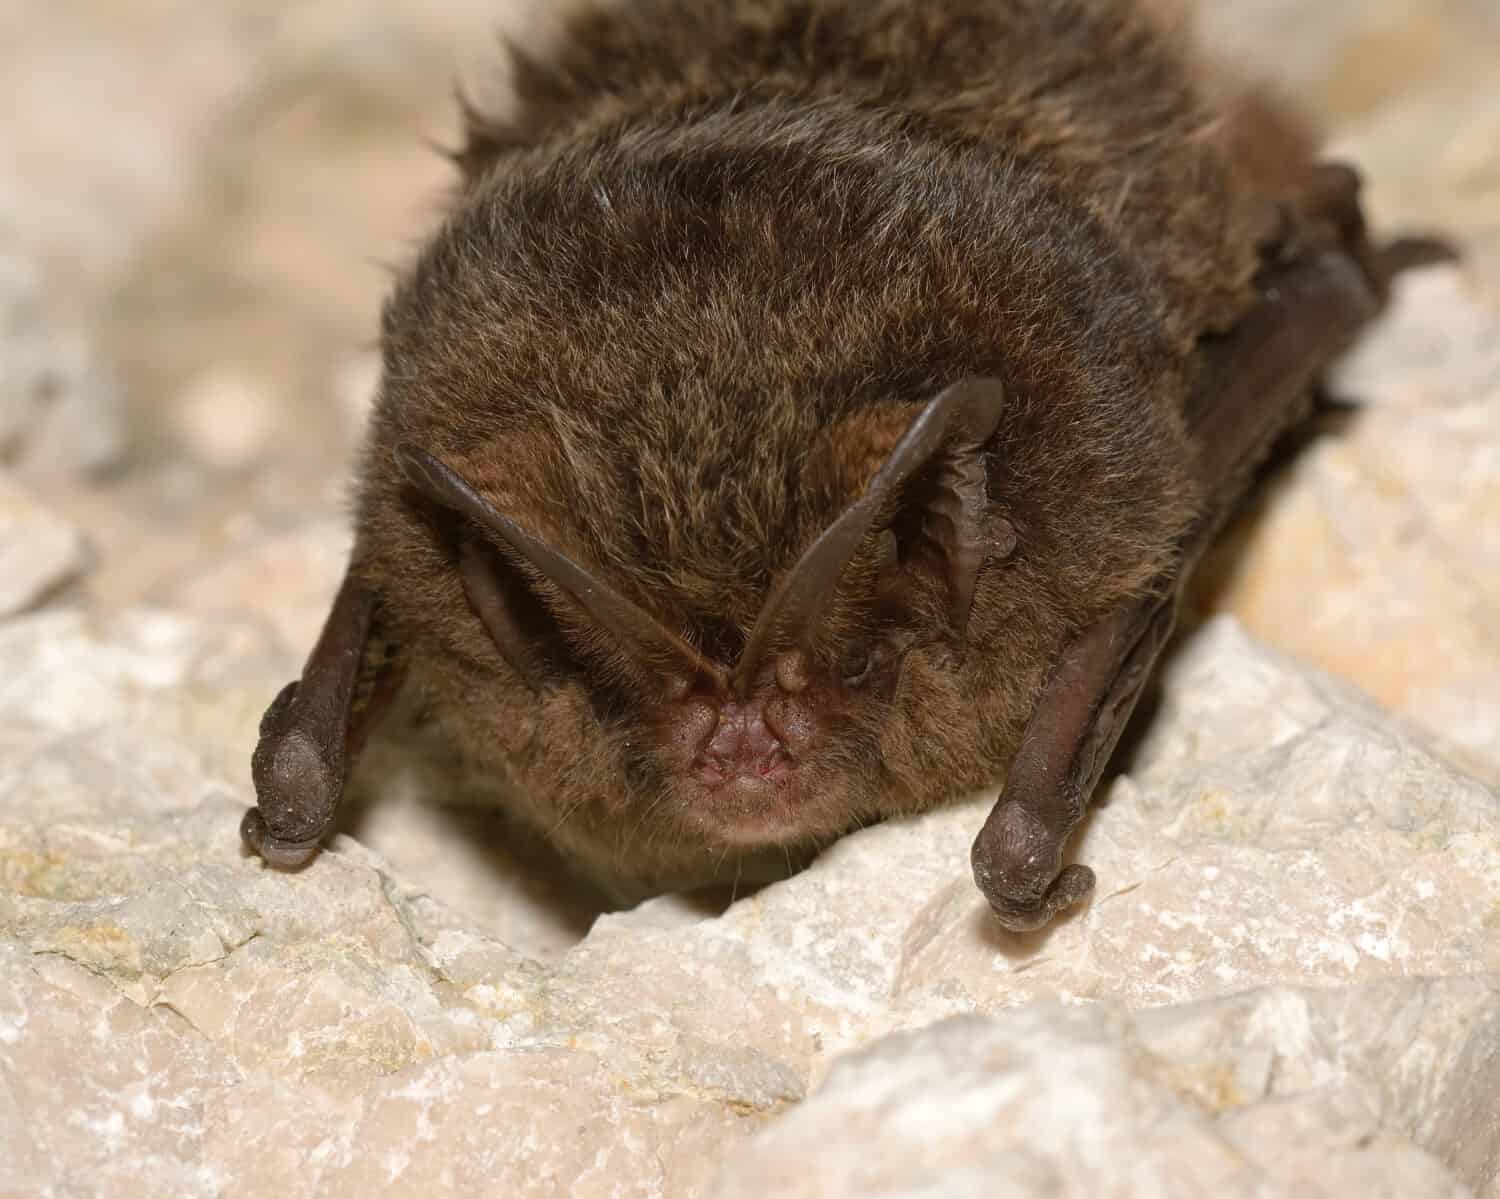 The barbastelle bat (Barbastella barbastellus), western barbastelle hibernation